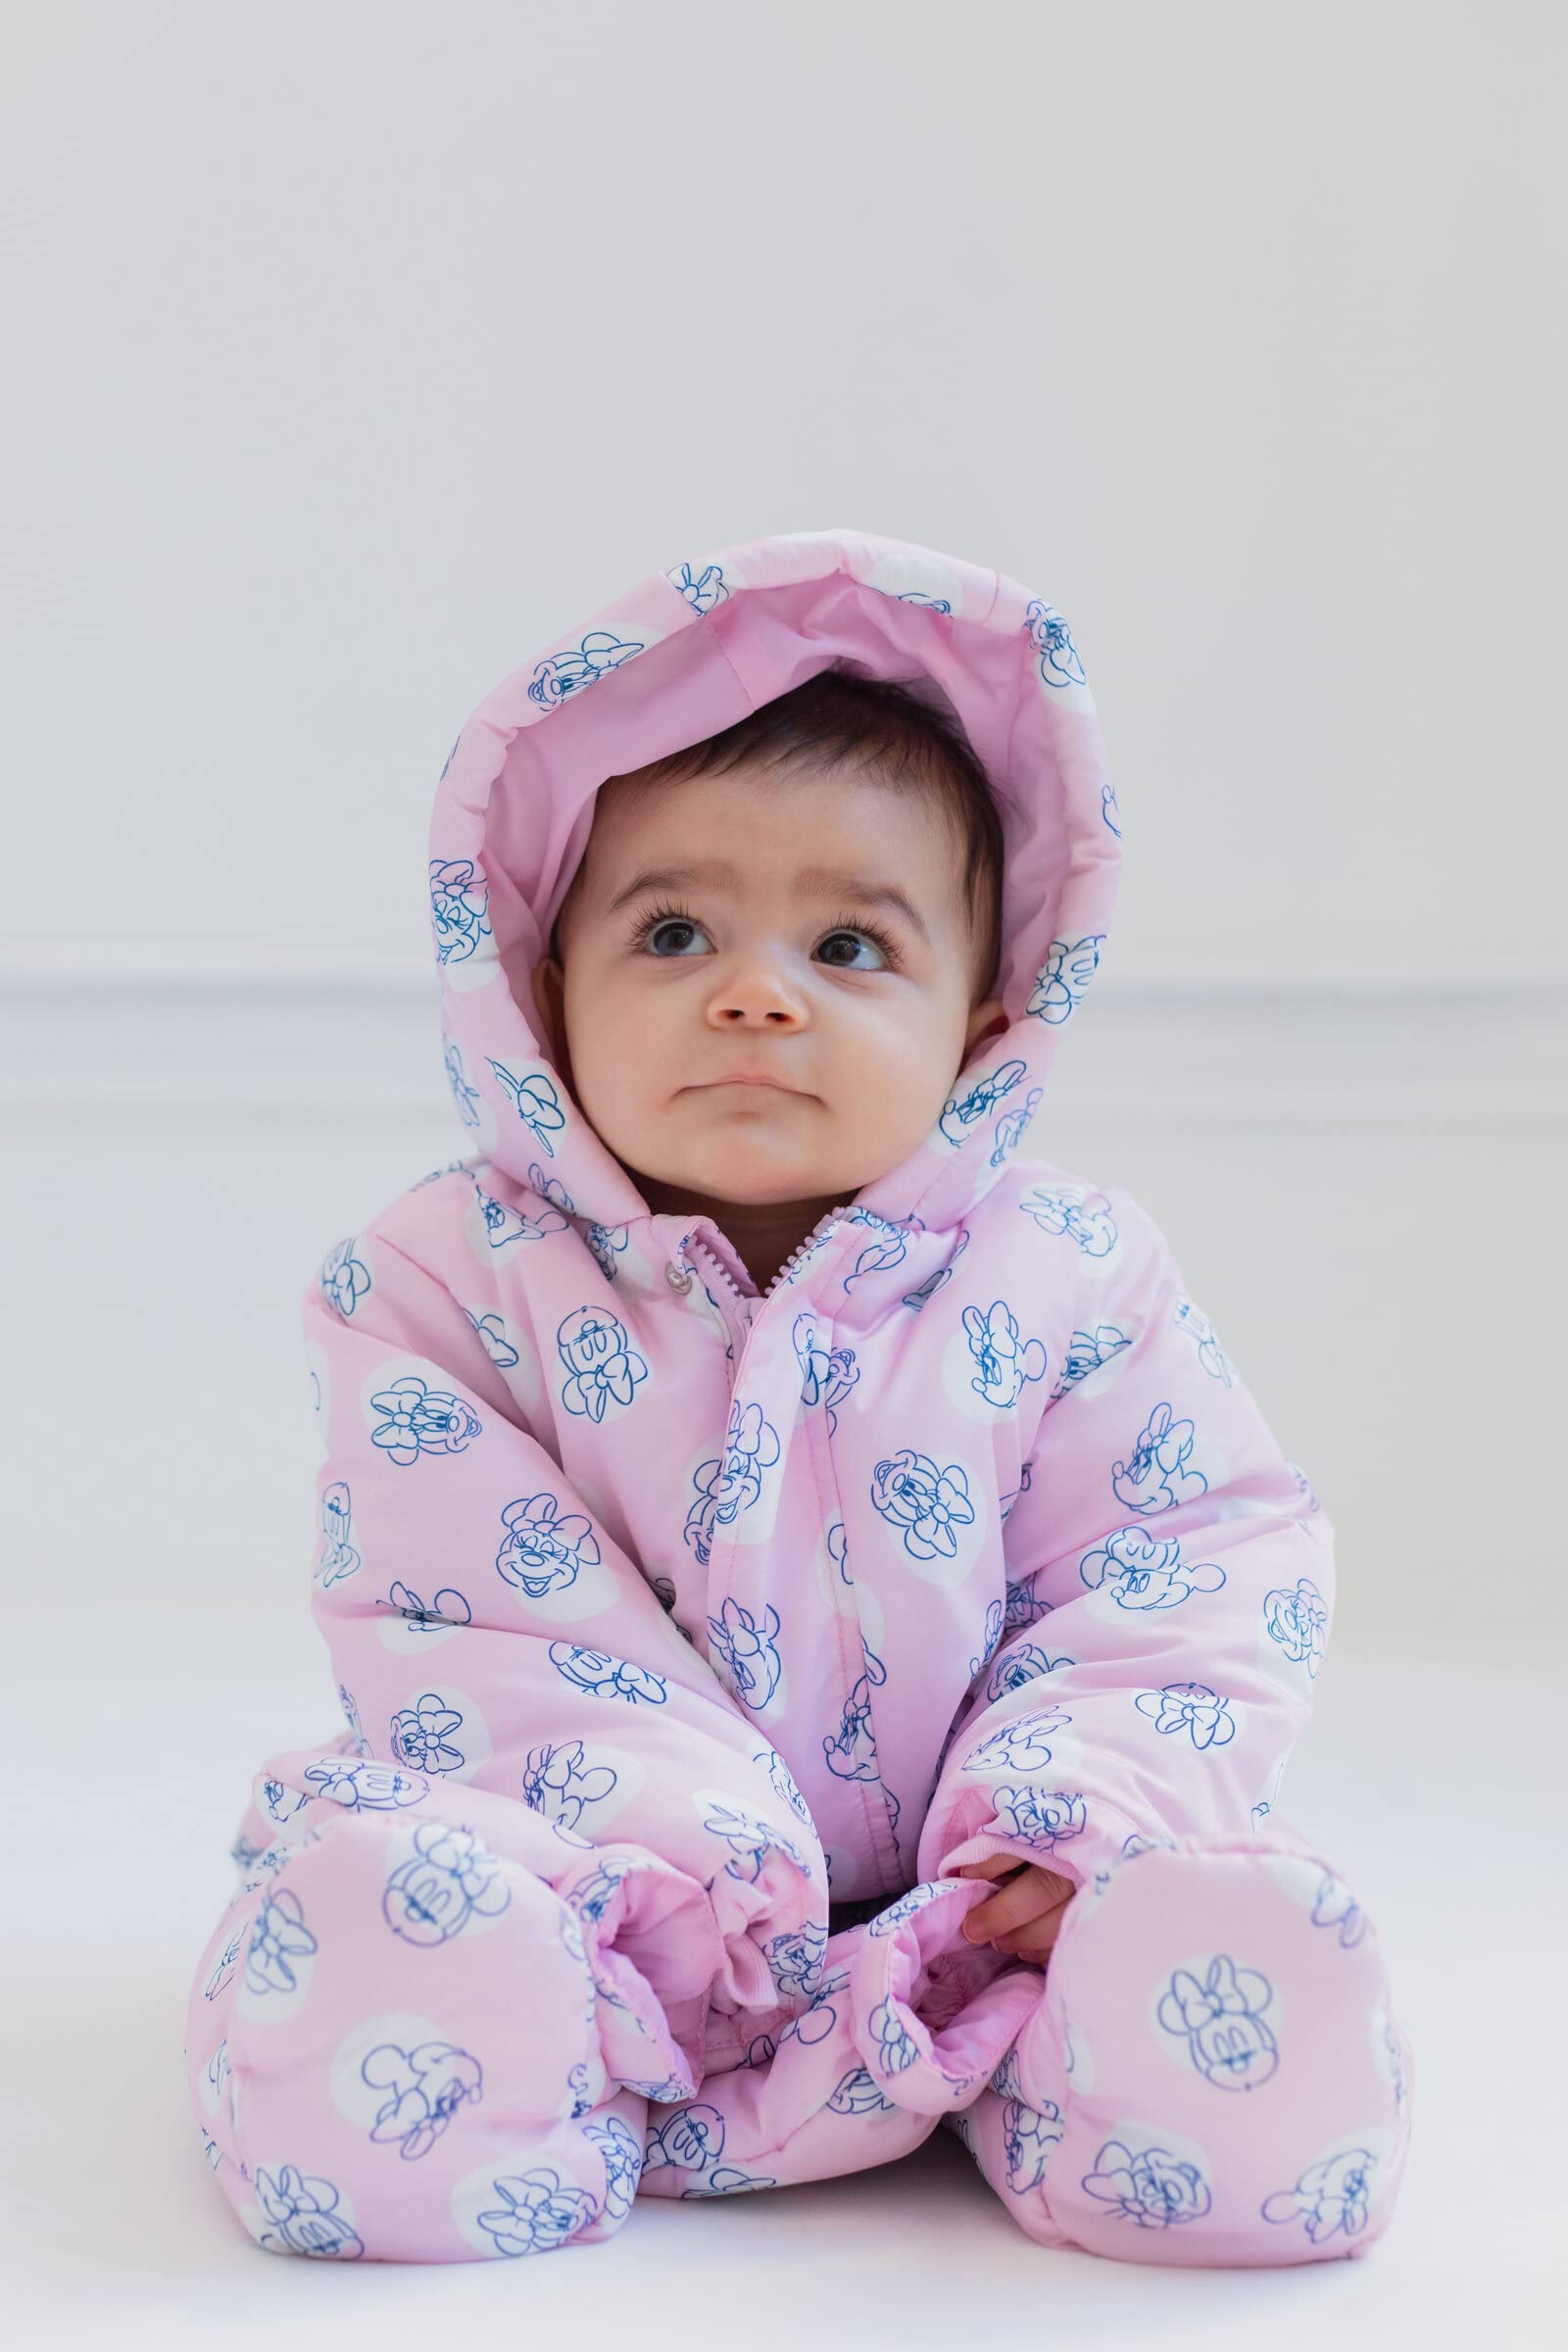 Disney Minnie Mouse Baby Girls Outerwear Pram Suit Newborn to Infant